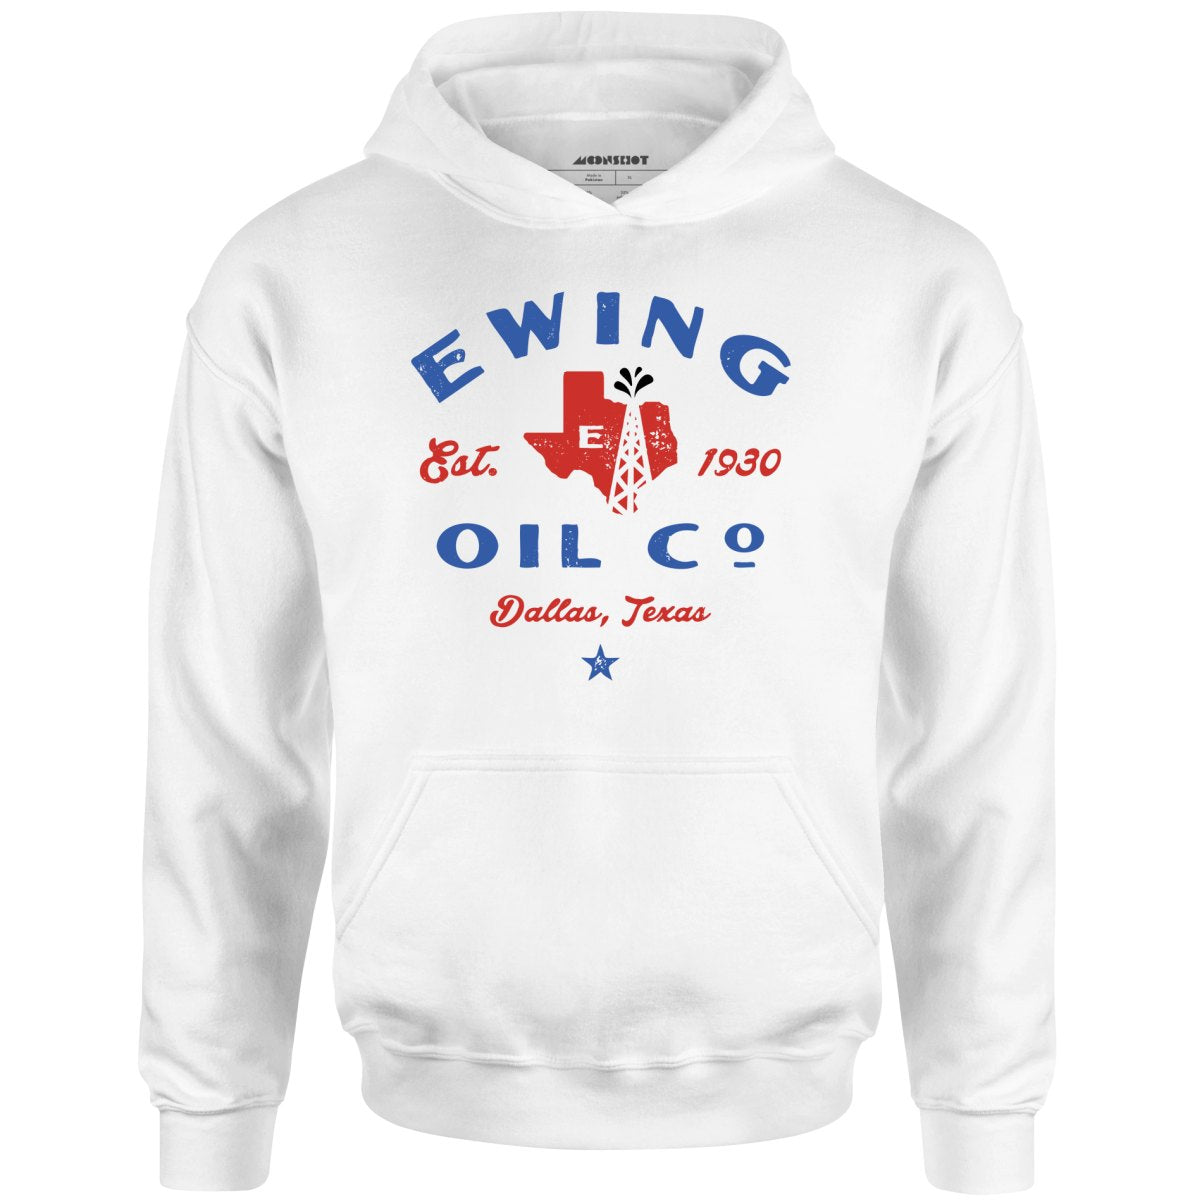 Ewing Oil Co - Dallas, Texas - Unisex Hoodie